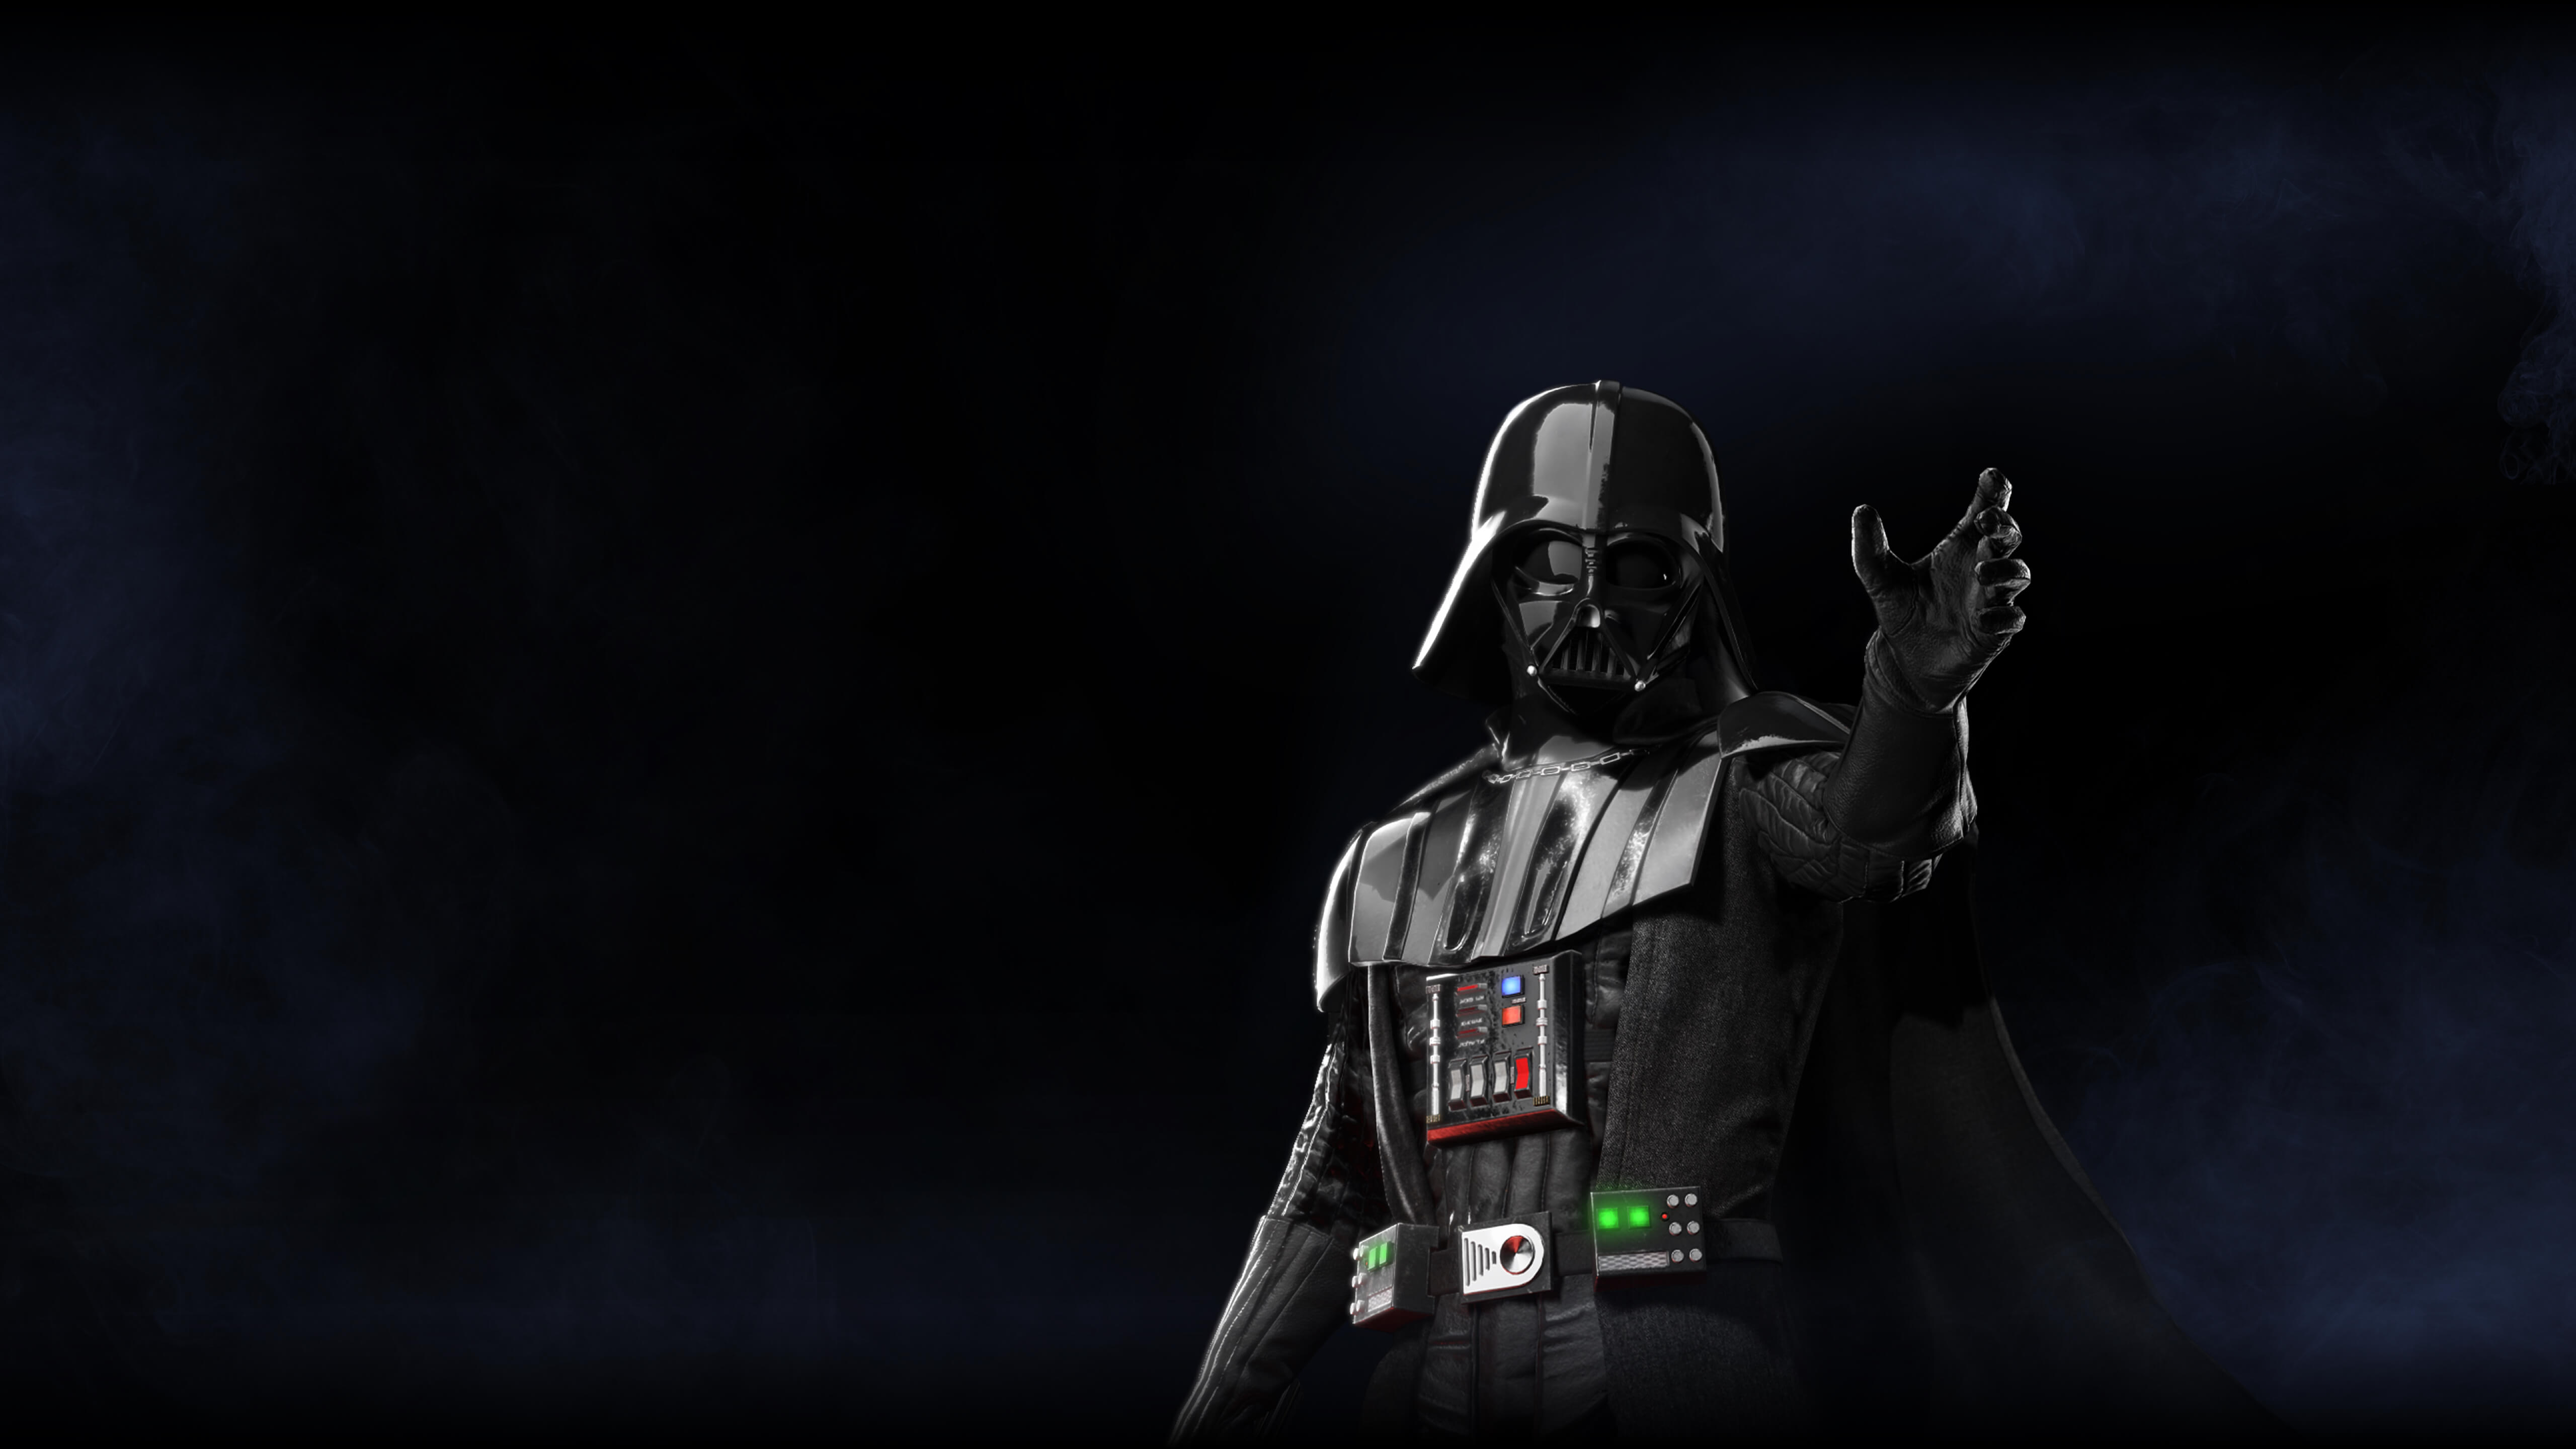 Darth Vader in Star Wars Battlefront II 5K715045380 - Darth Vader in Star Wars Battlefront II 5K - Wars, Vader, Tracer, Star, Darth, Battlefront